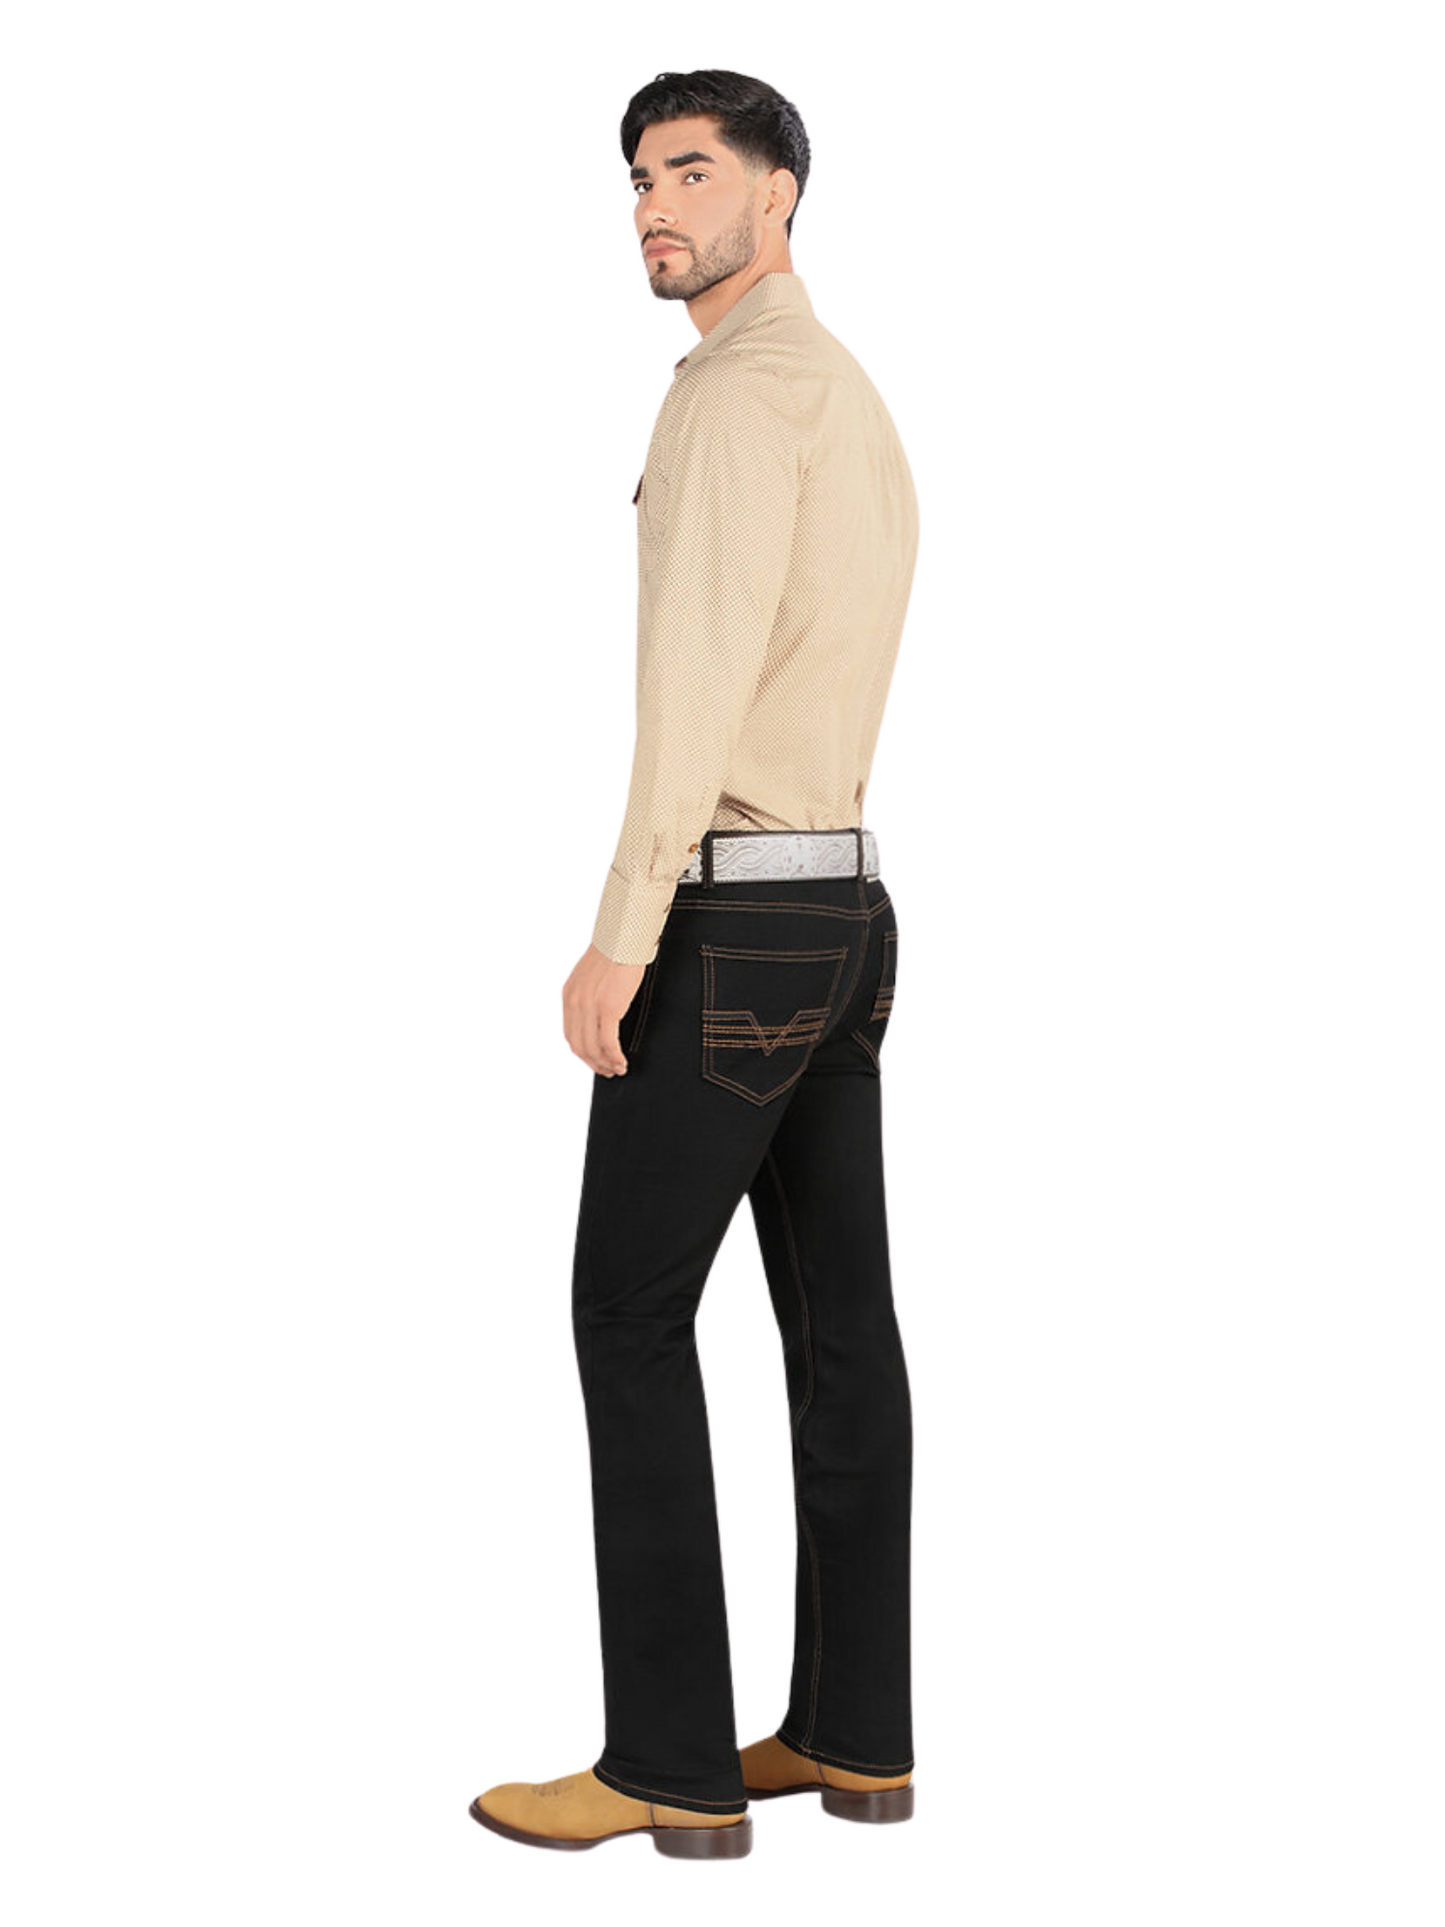 Pantalon Vaquero de Mezclilla Stretch para Hombre 'Montero' - ID: 5310 Denim Jeans Montero 